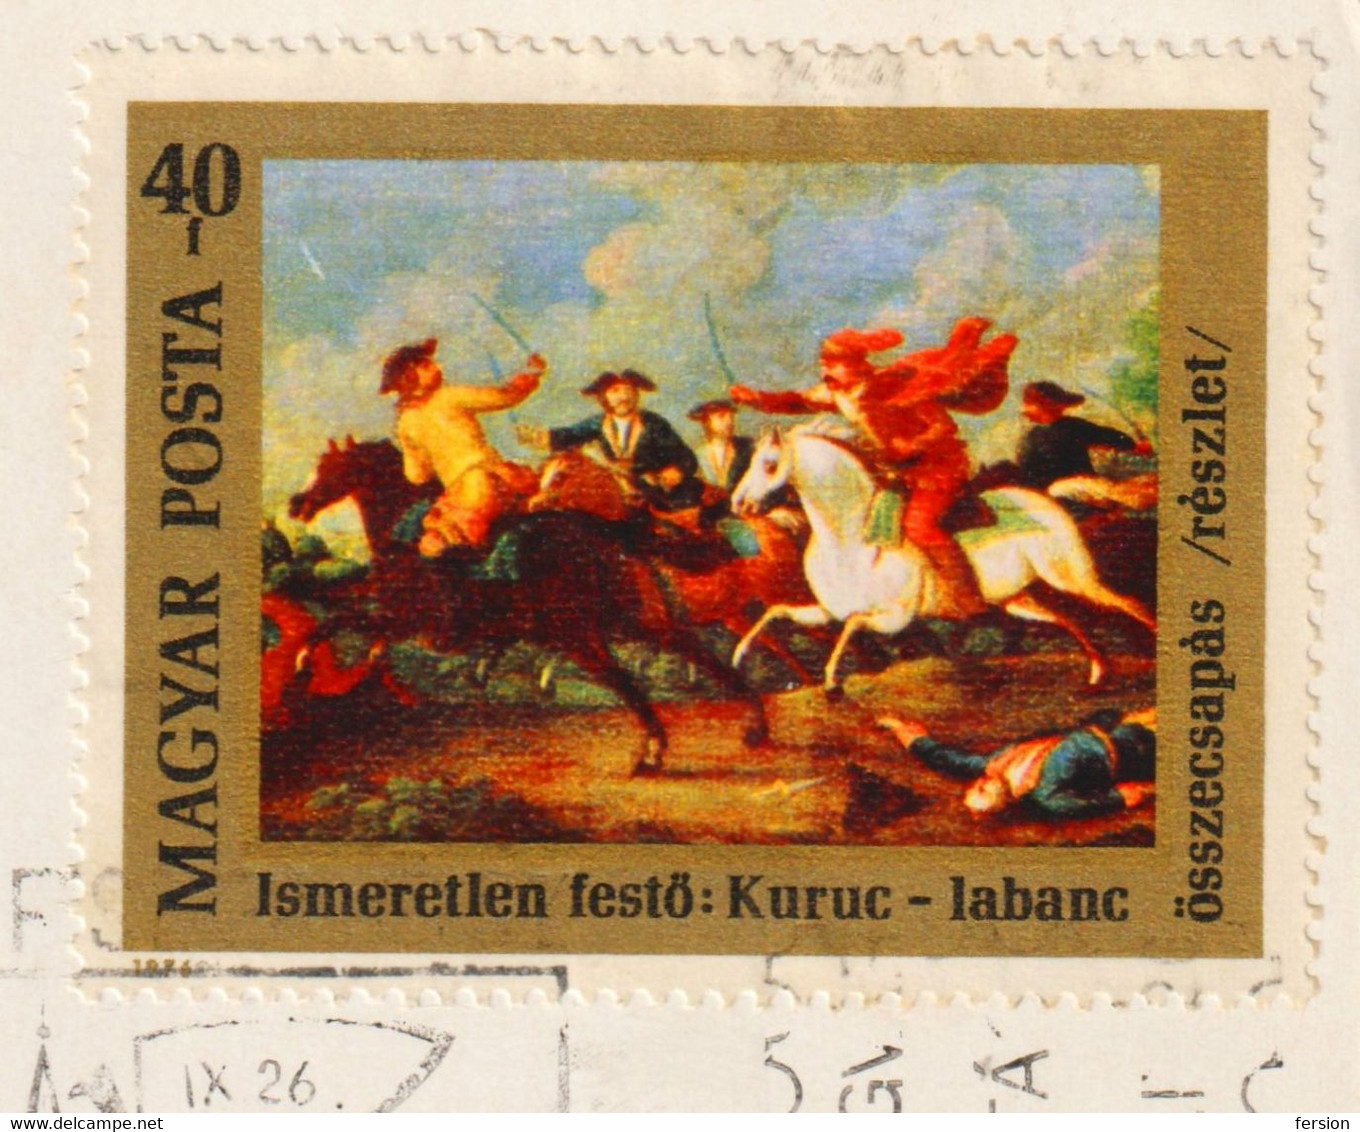 PARACHUTE POST mute postmark Ukraine Ungvár 1977 HUNGARY painting parcel posto due STATIONERY POSTCARD Nyírbátor